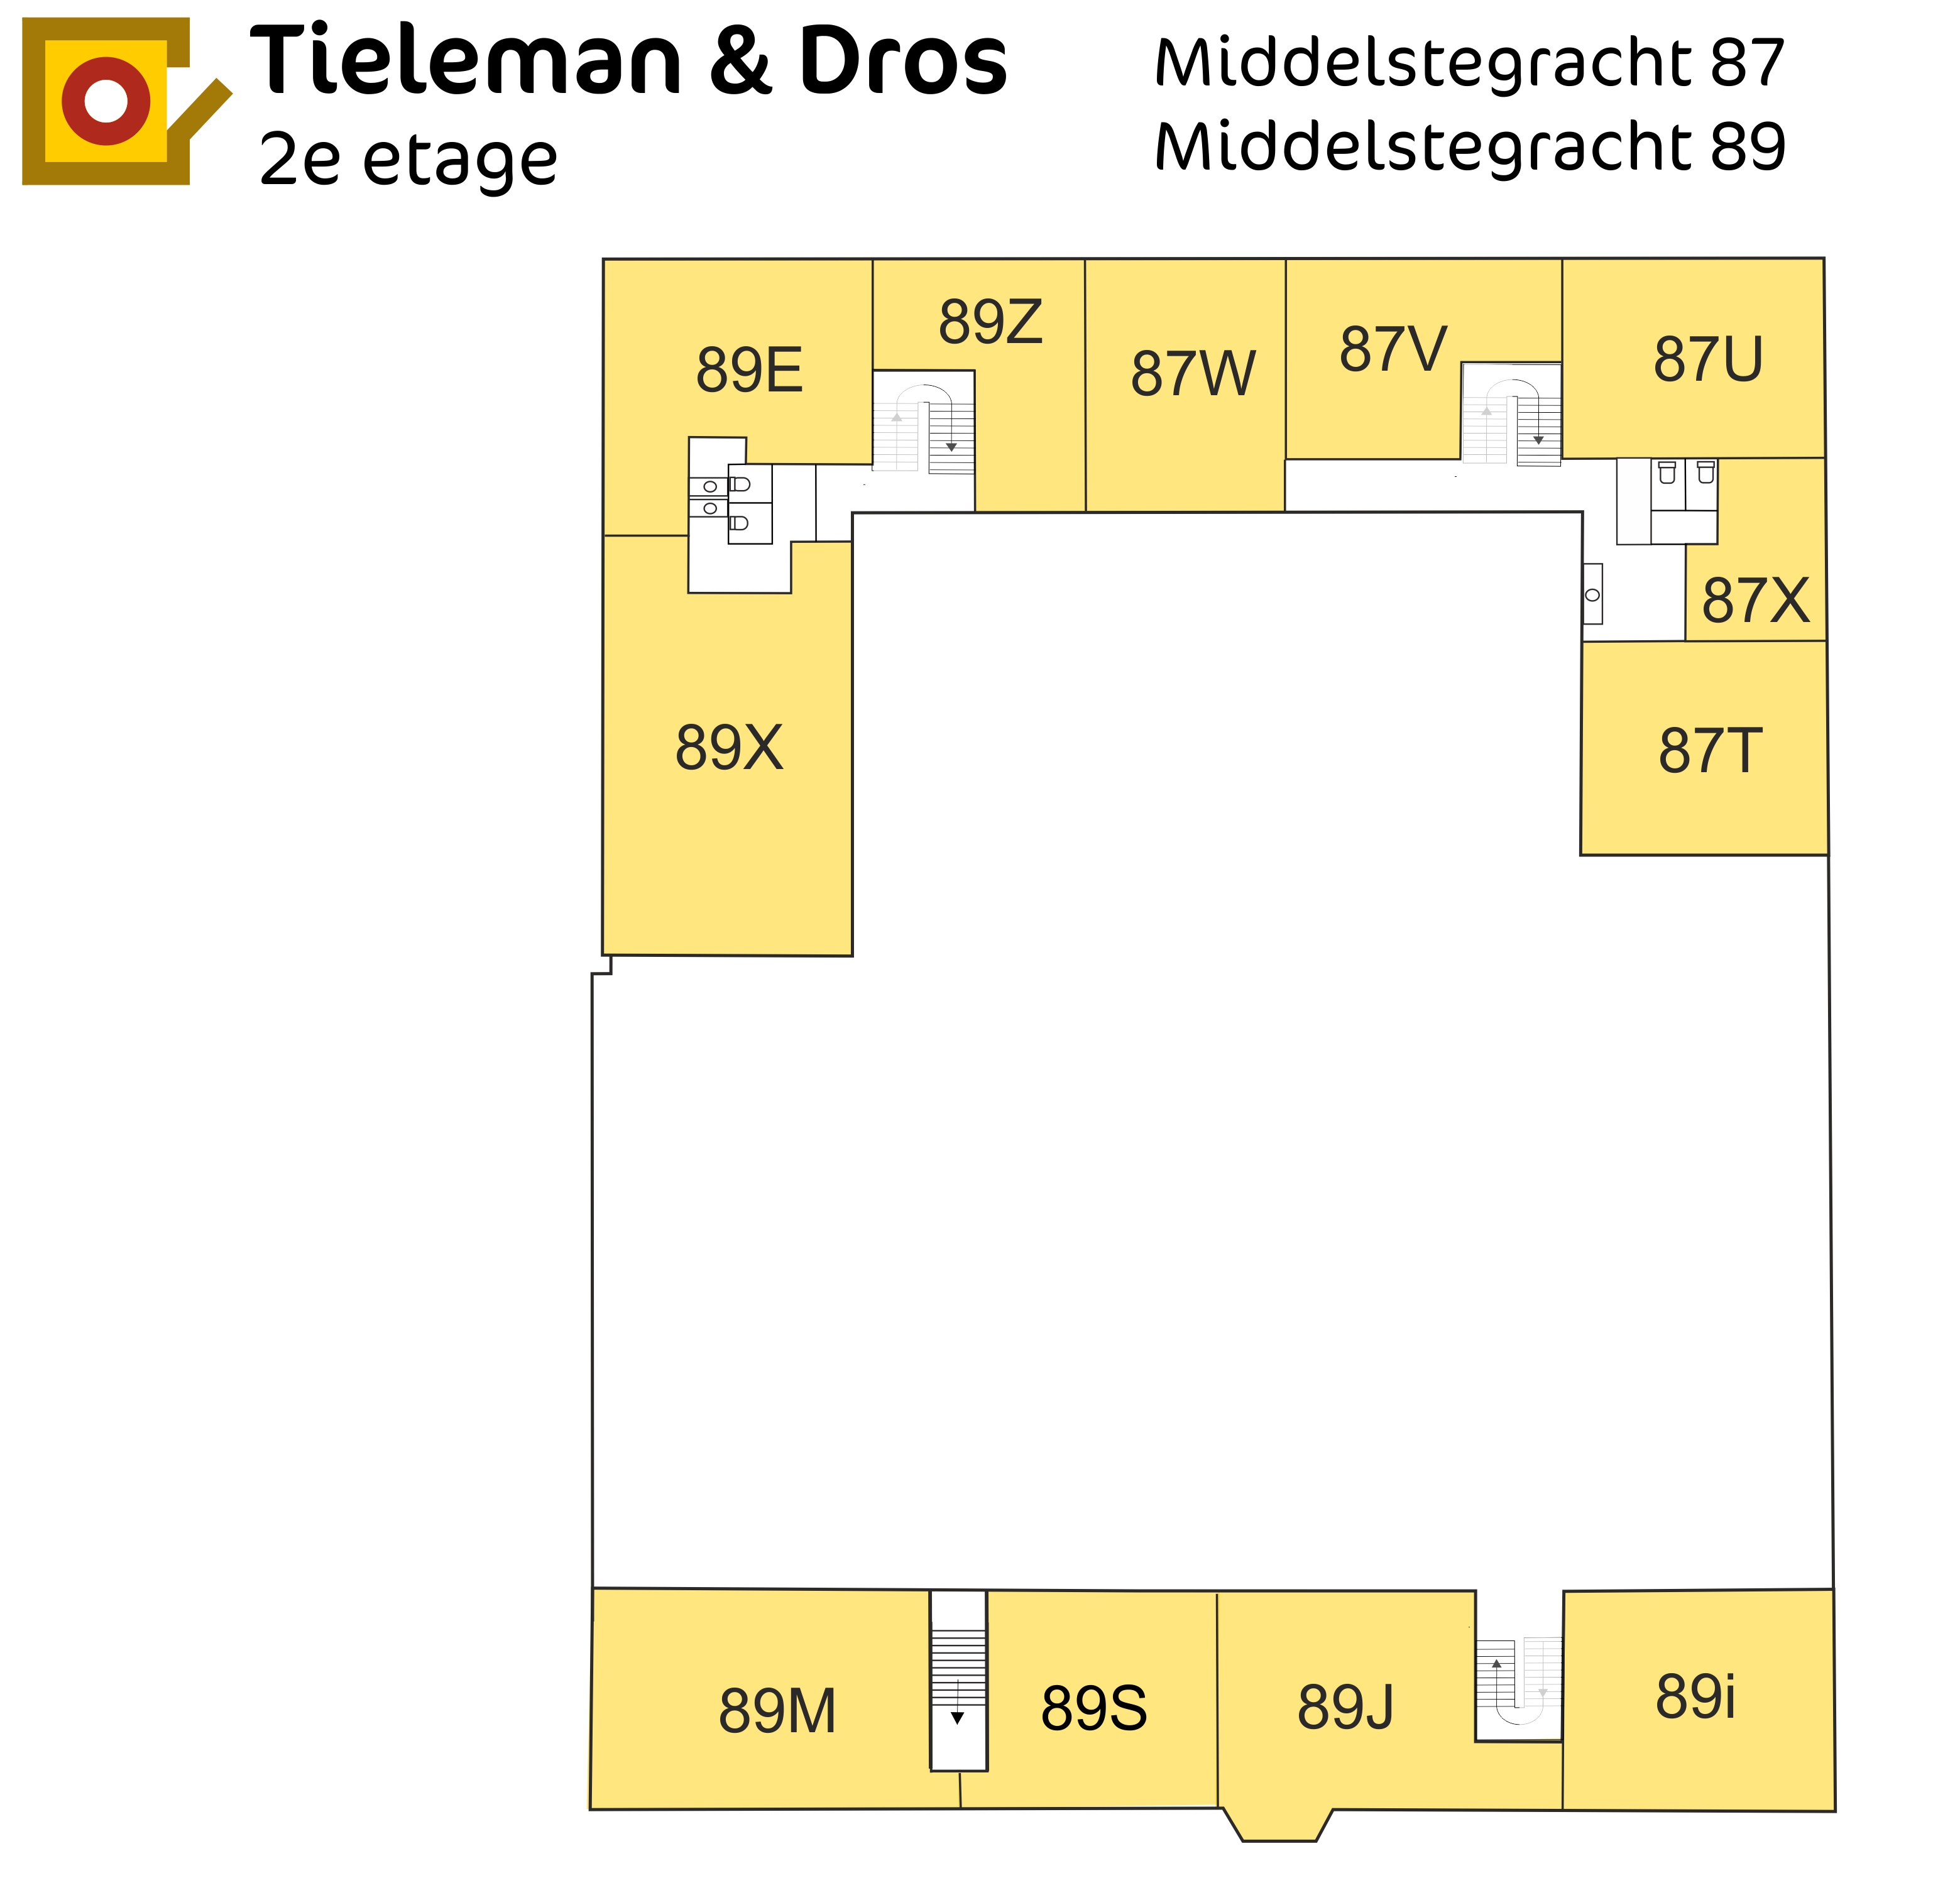 Tieleman en Dros bedrijfsverzamelgebouw 2e etage